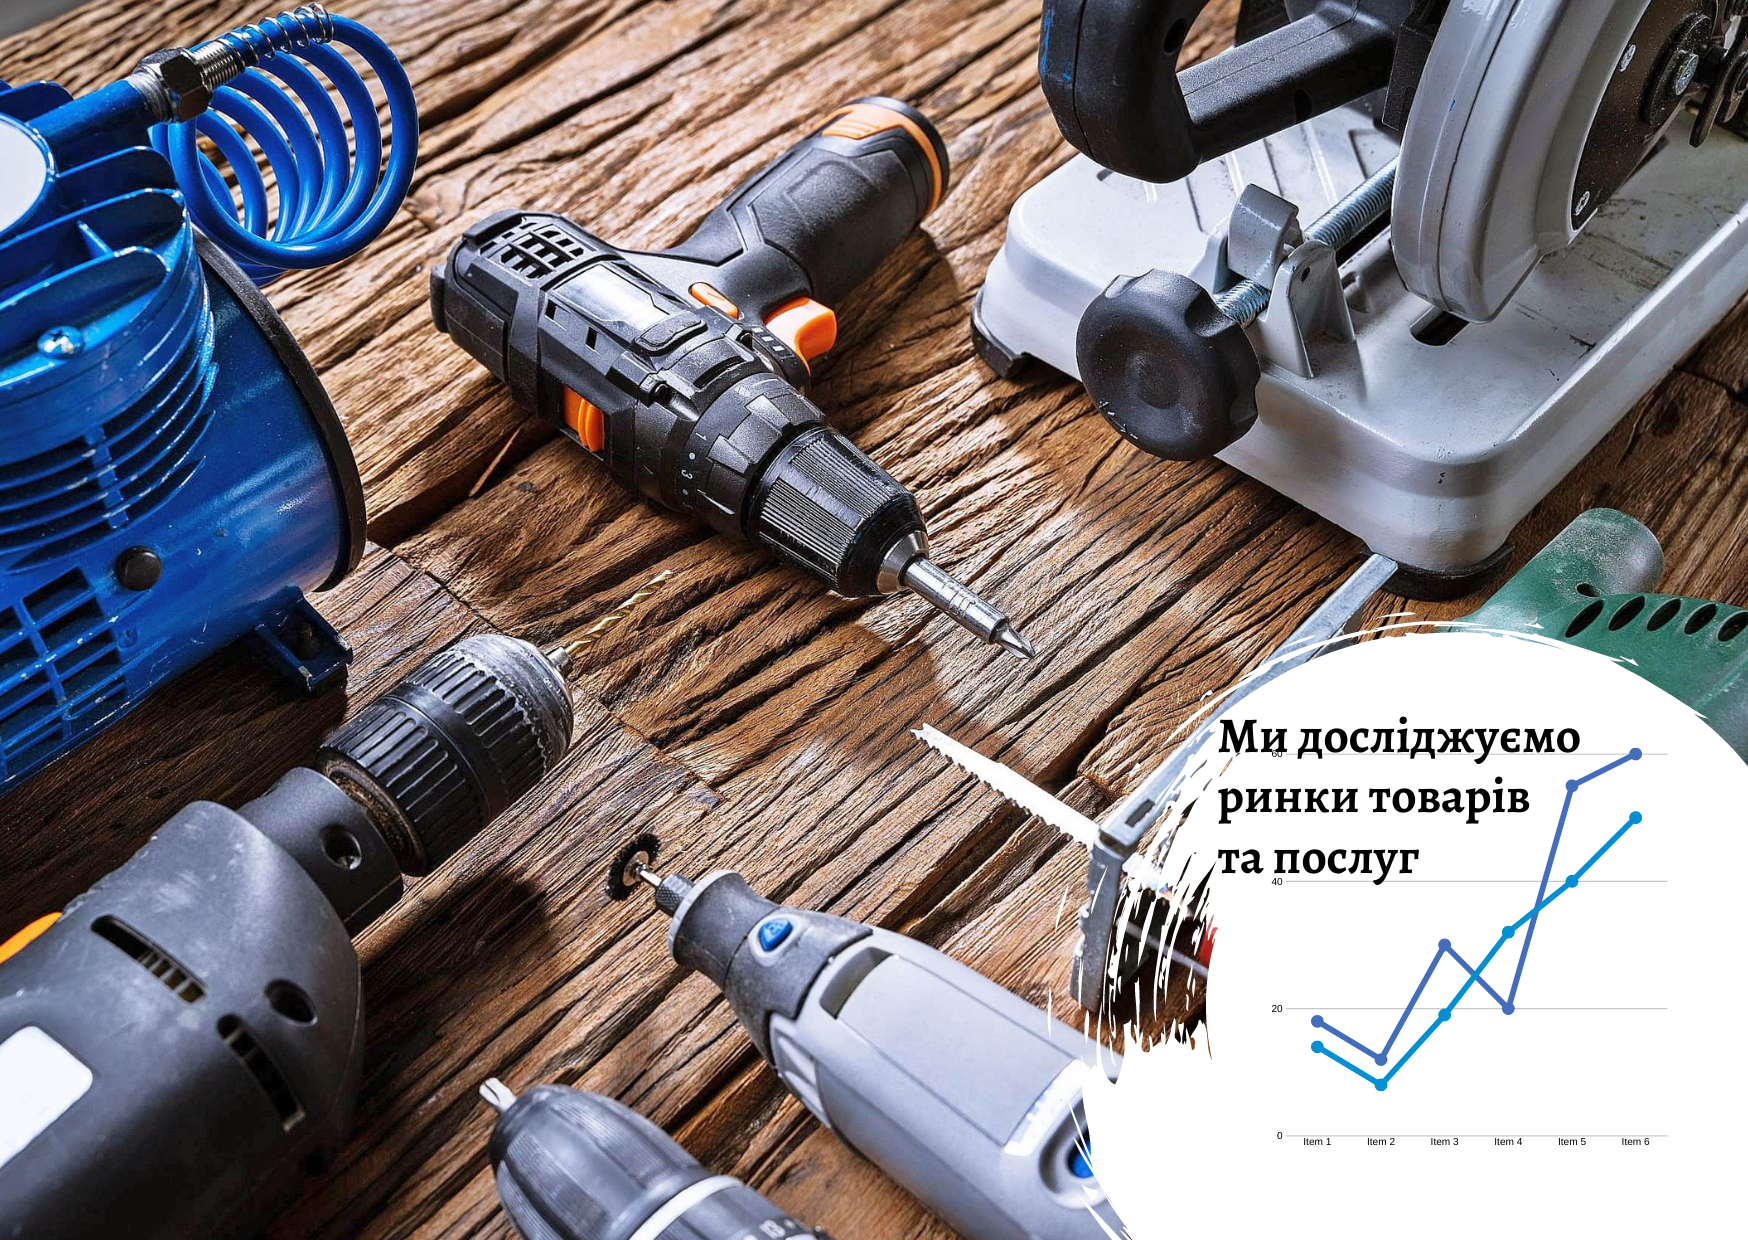 Ukrainian power tools market - research report